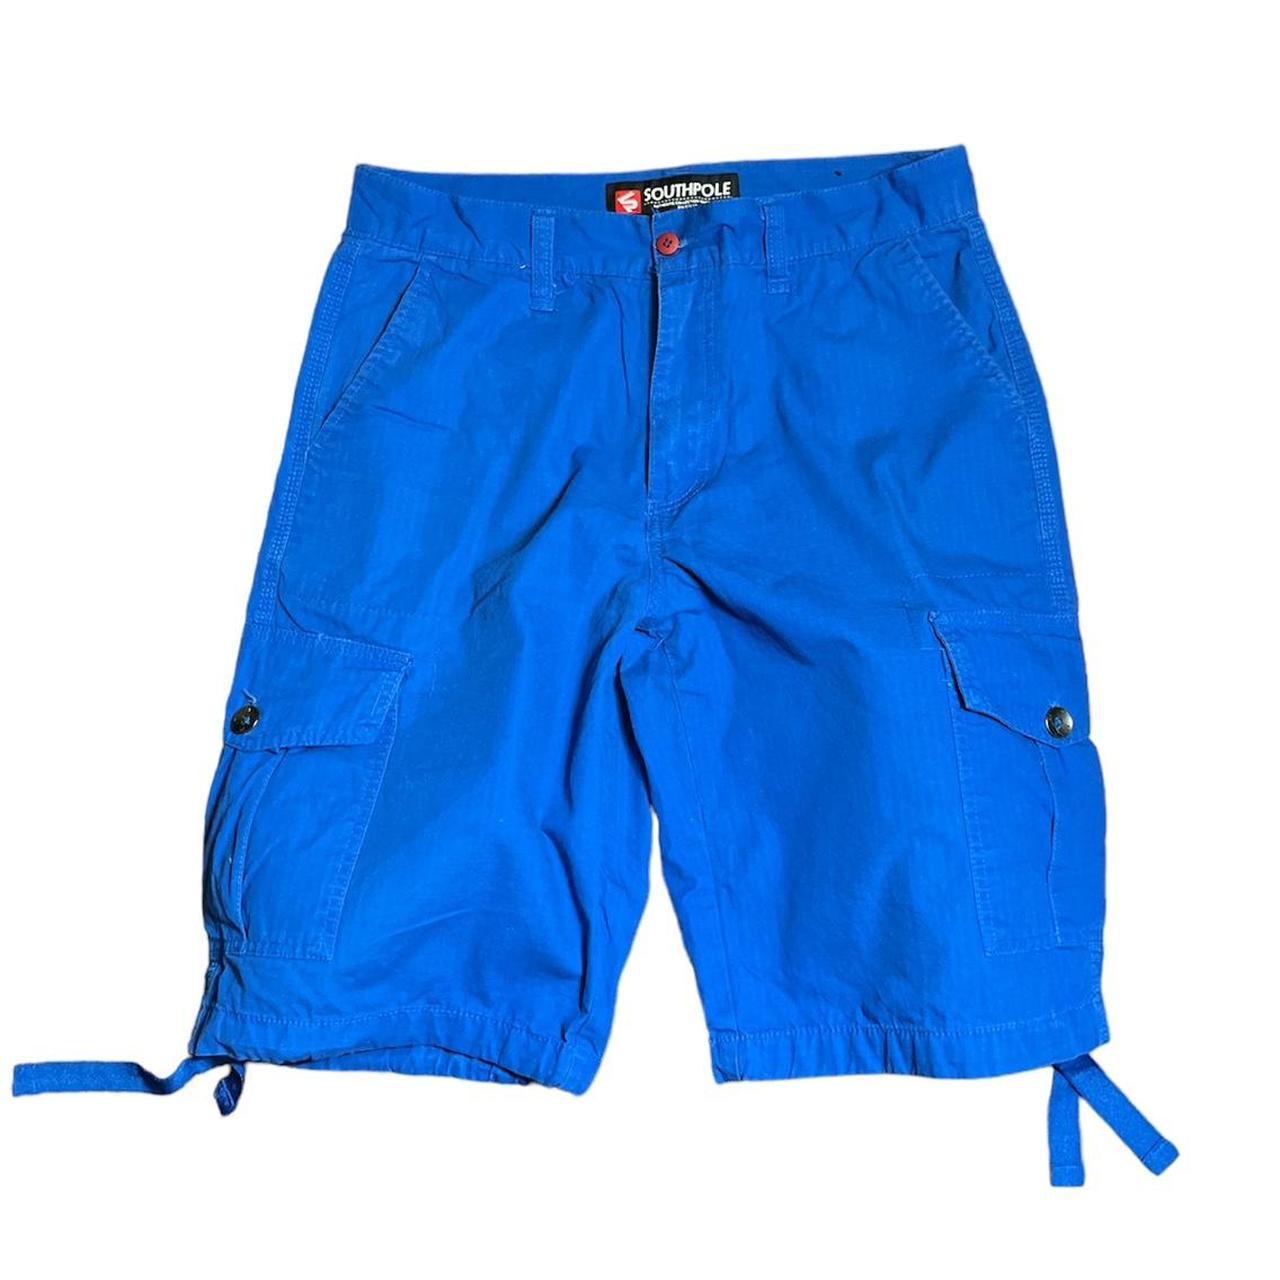 Southpole Blue Cargo Shorts #jnco #skate #wideleg - Depop